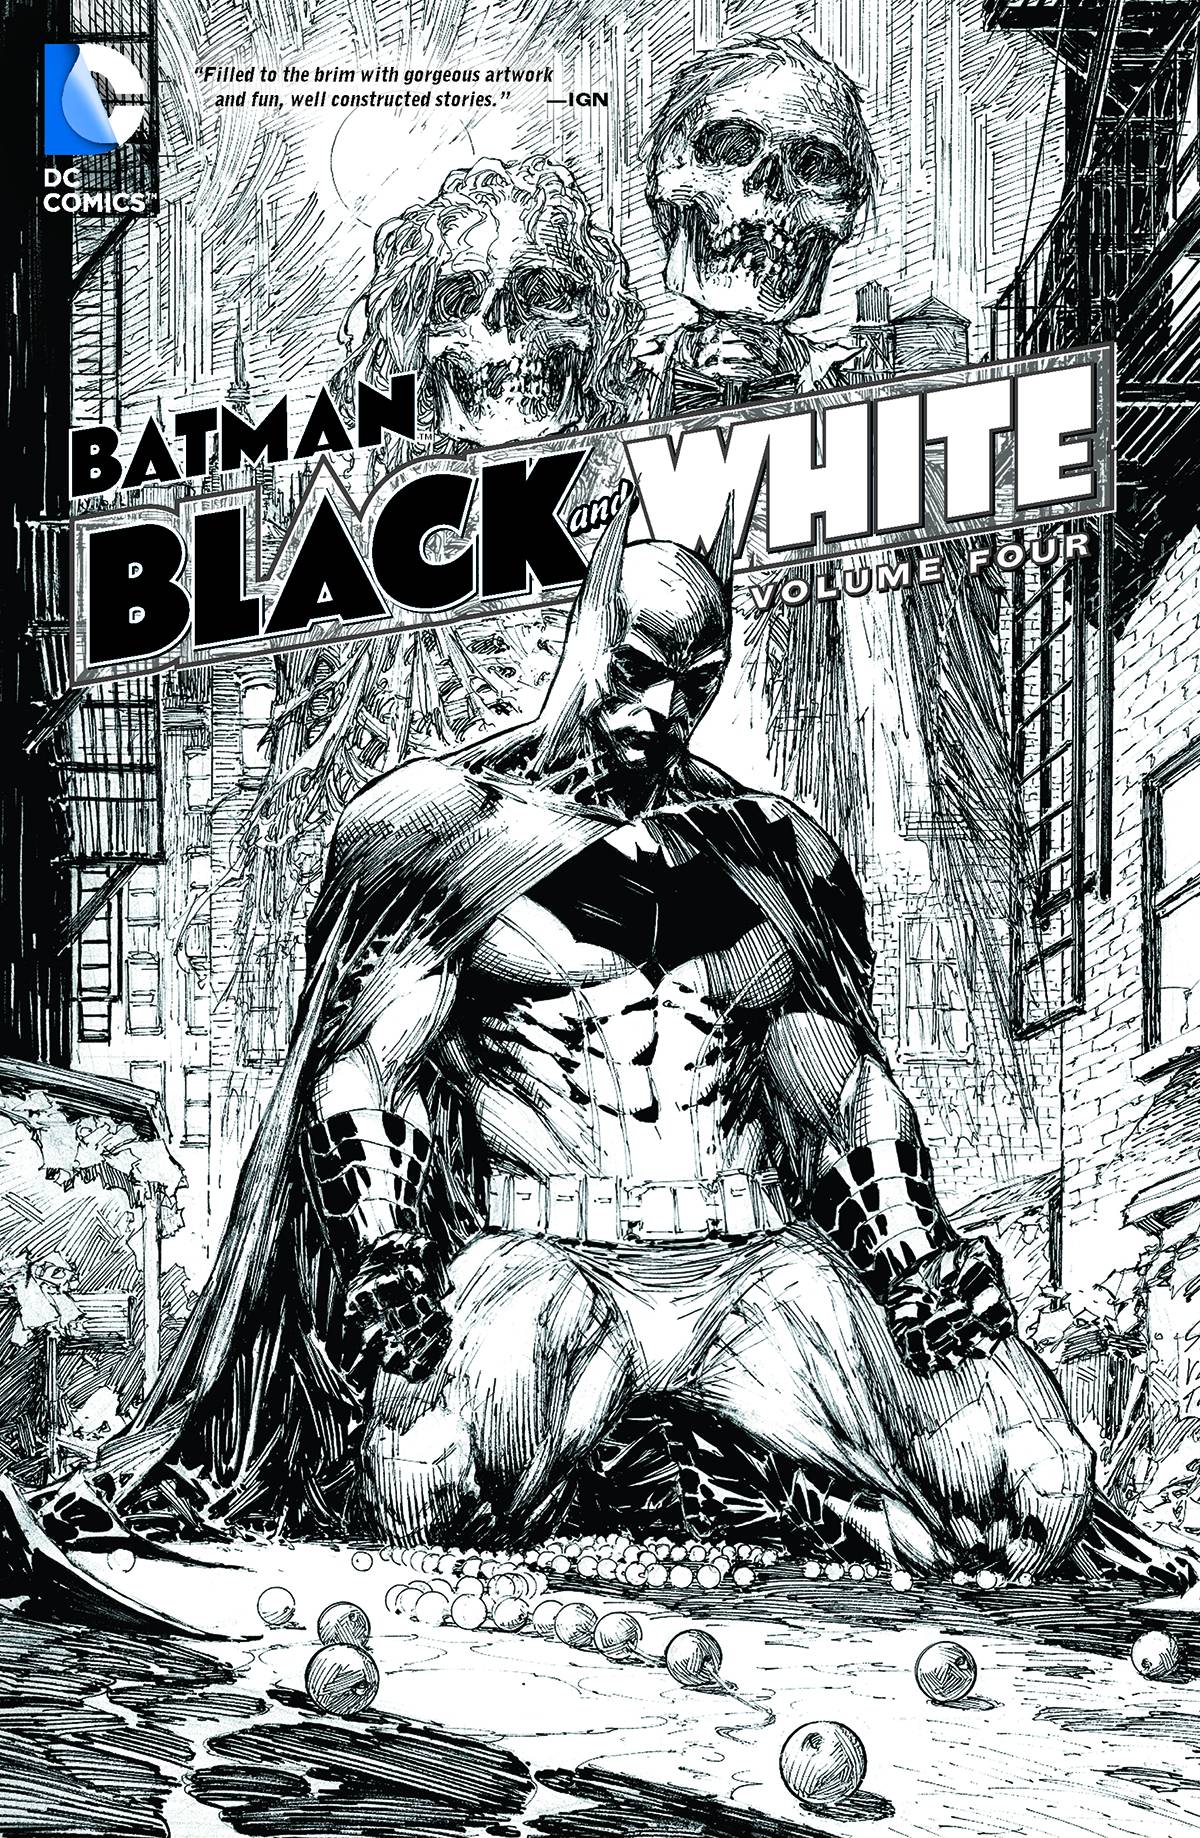 BATMAN BLACK AND WHITE TP VOL 04